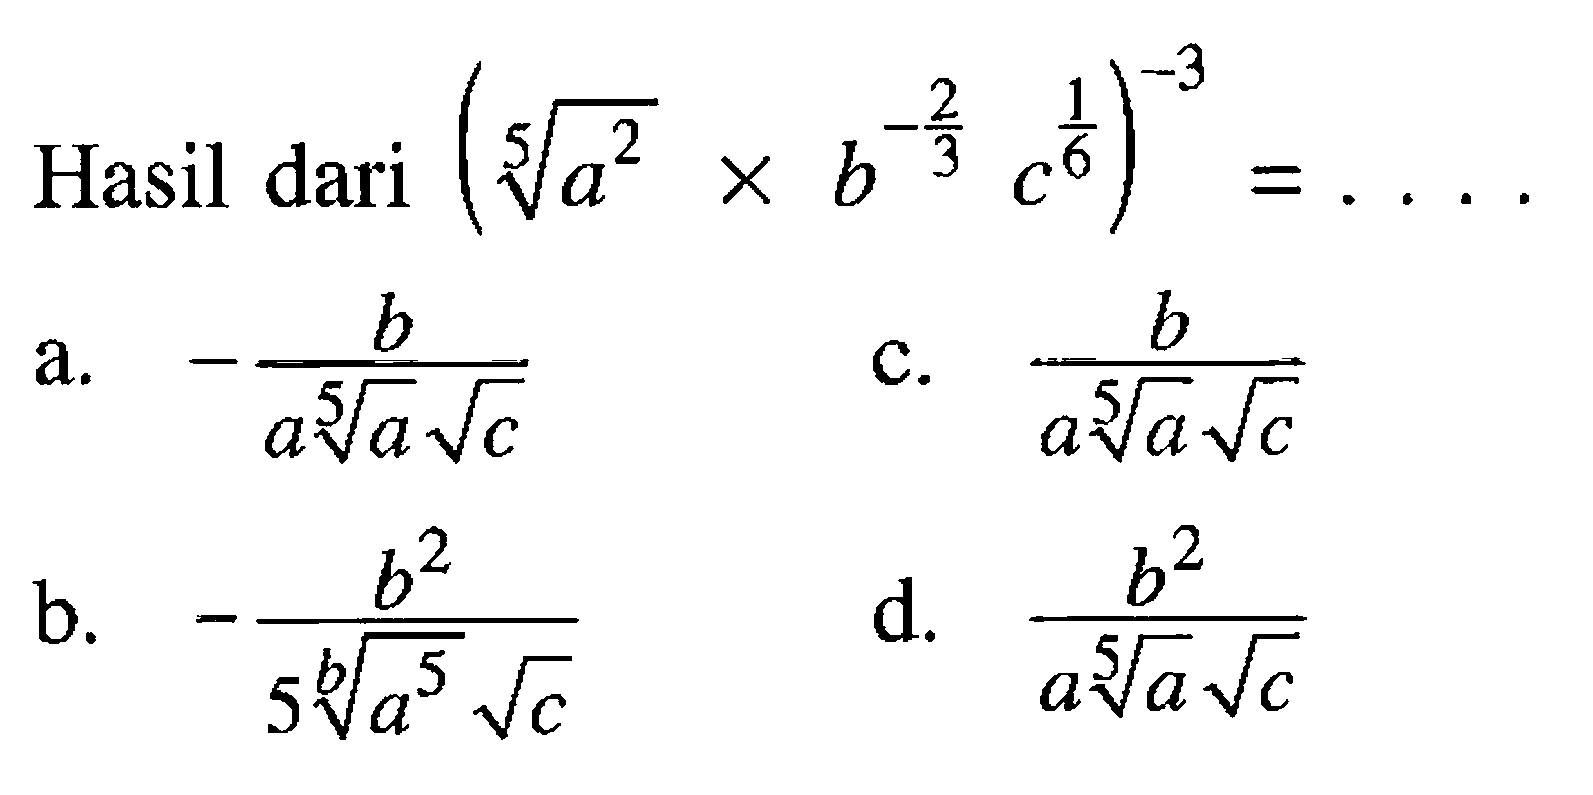 Hasil dari ((a^2)^(1/5)xb^(-2/3) c^(1/6))^(-3)=. . . .